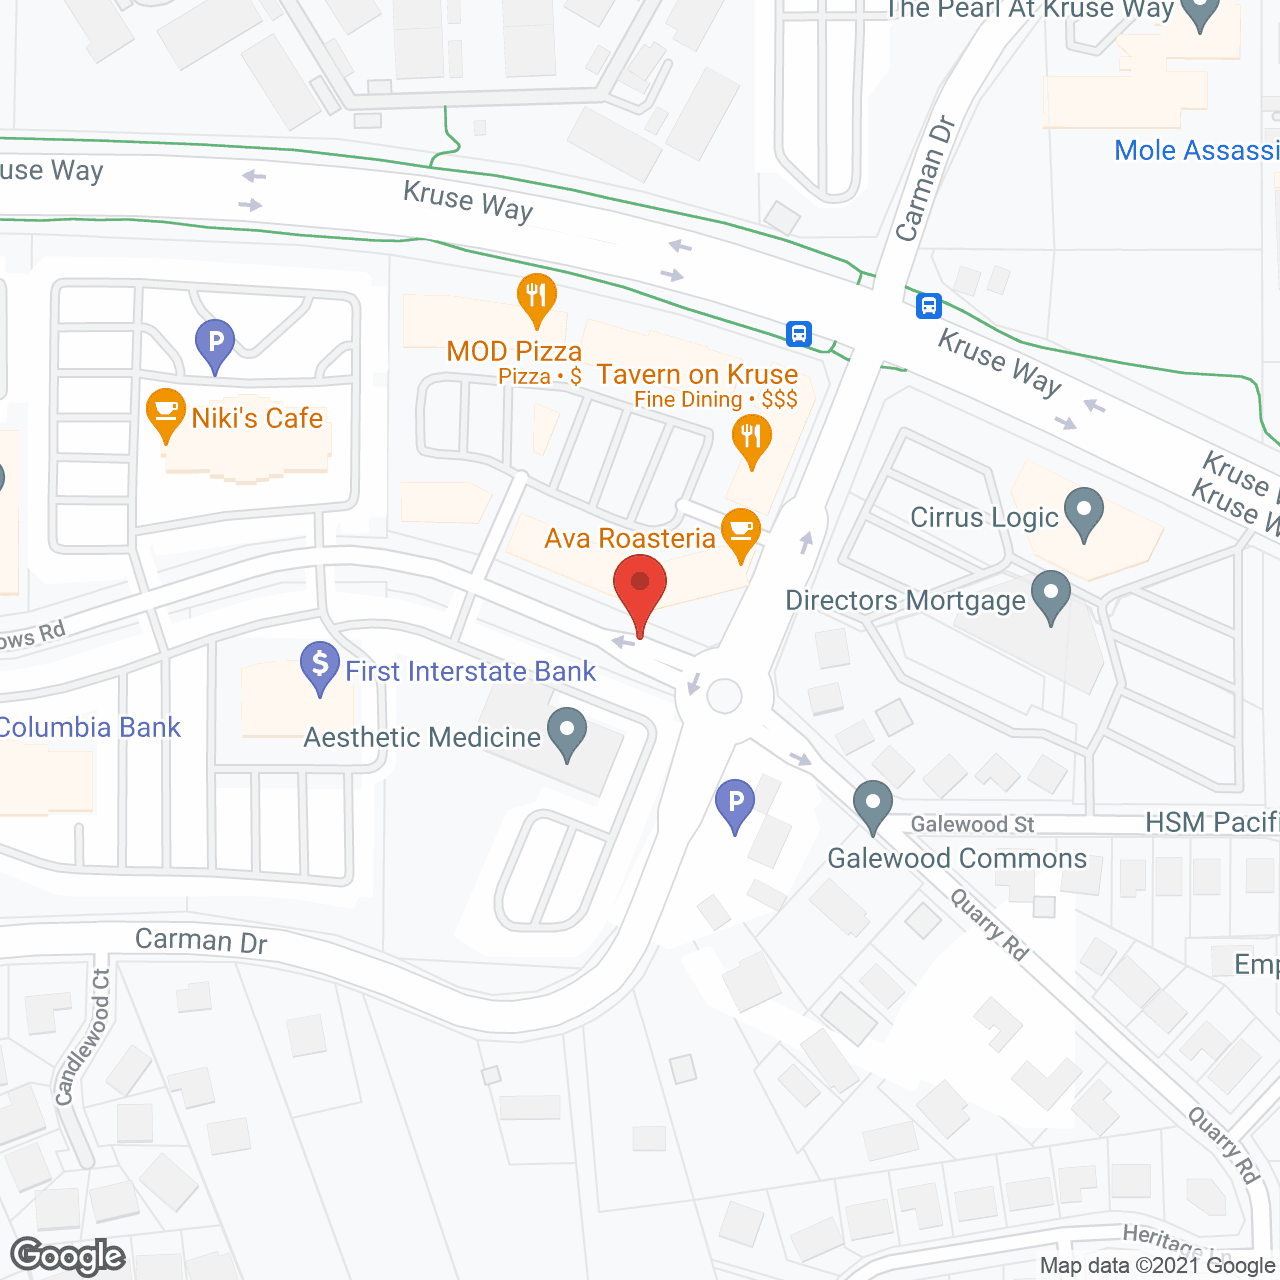 TheKey Portland in google map